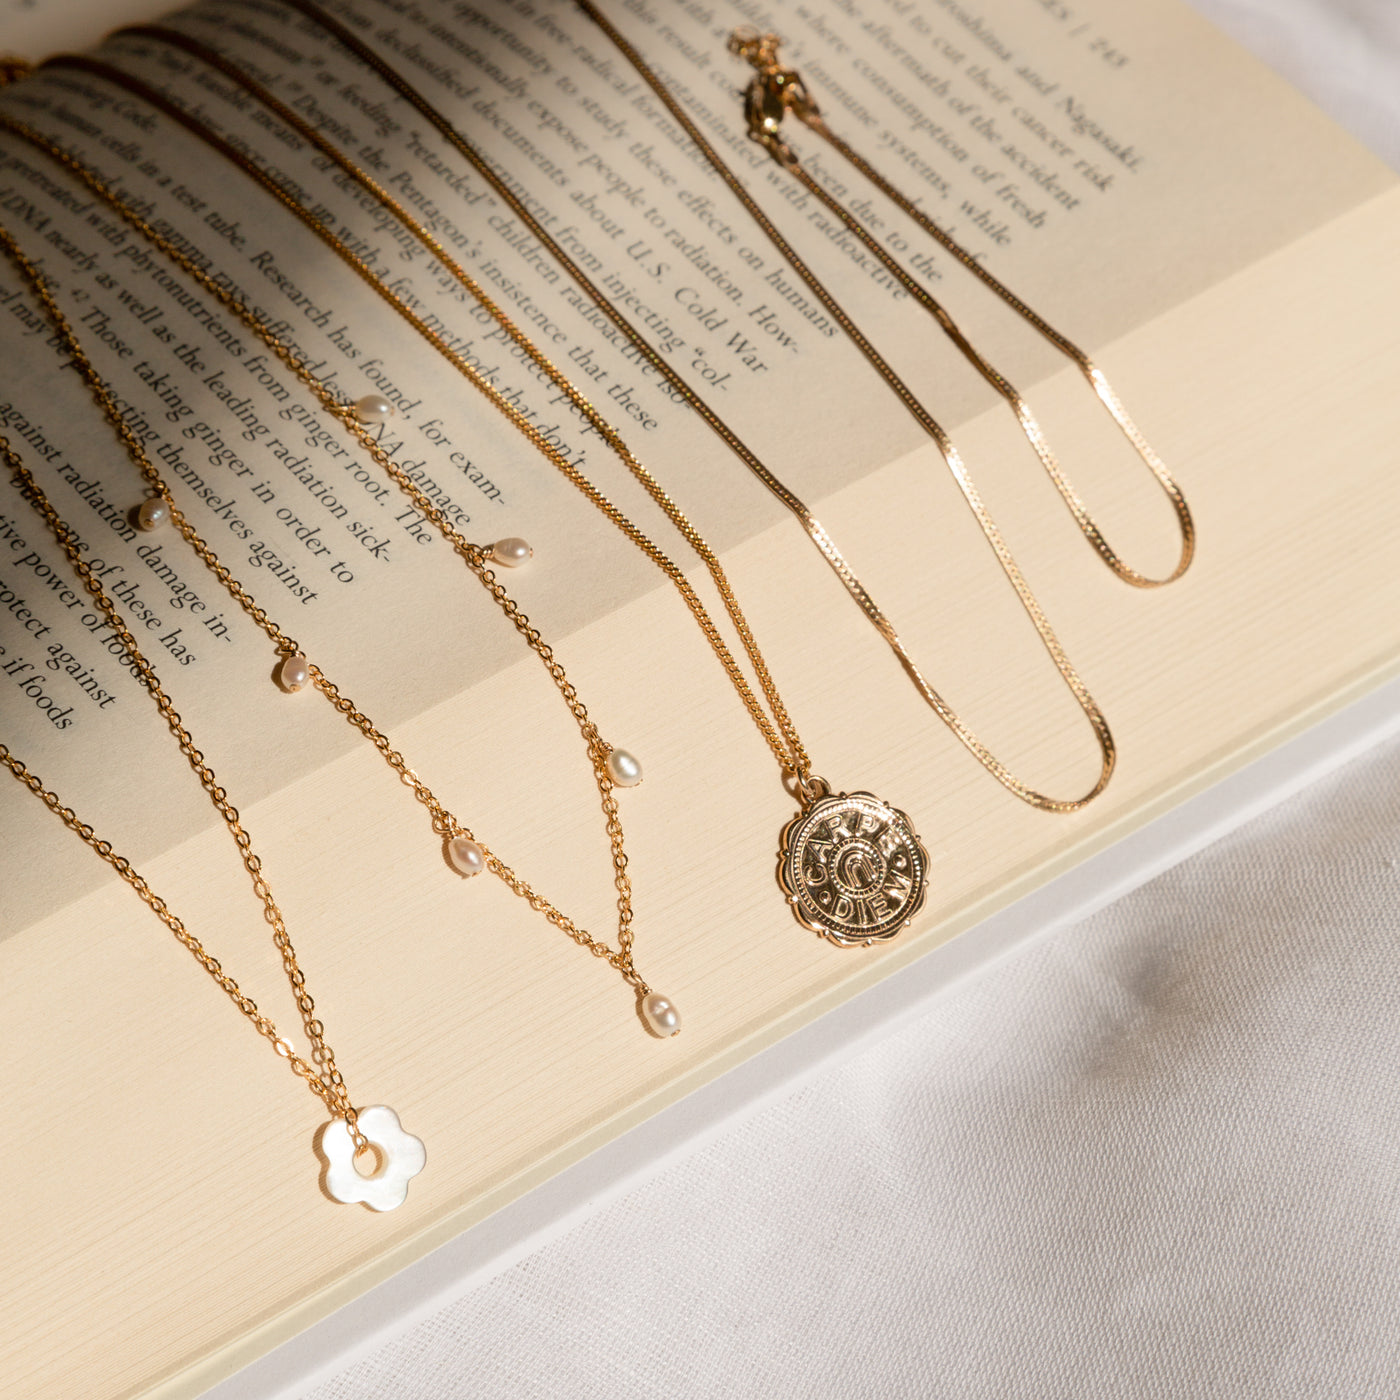 Carpe Diem Necklace | Simple & Dainty Jewelry